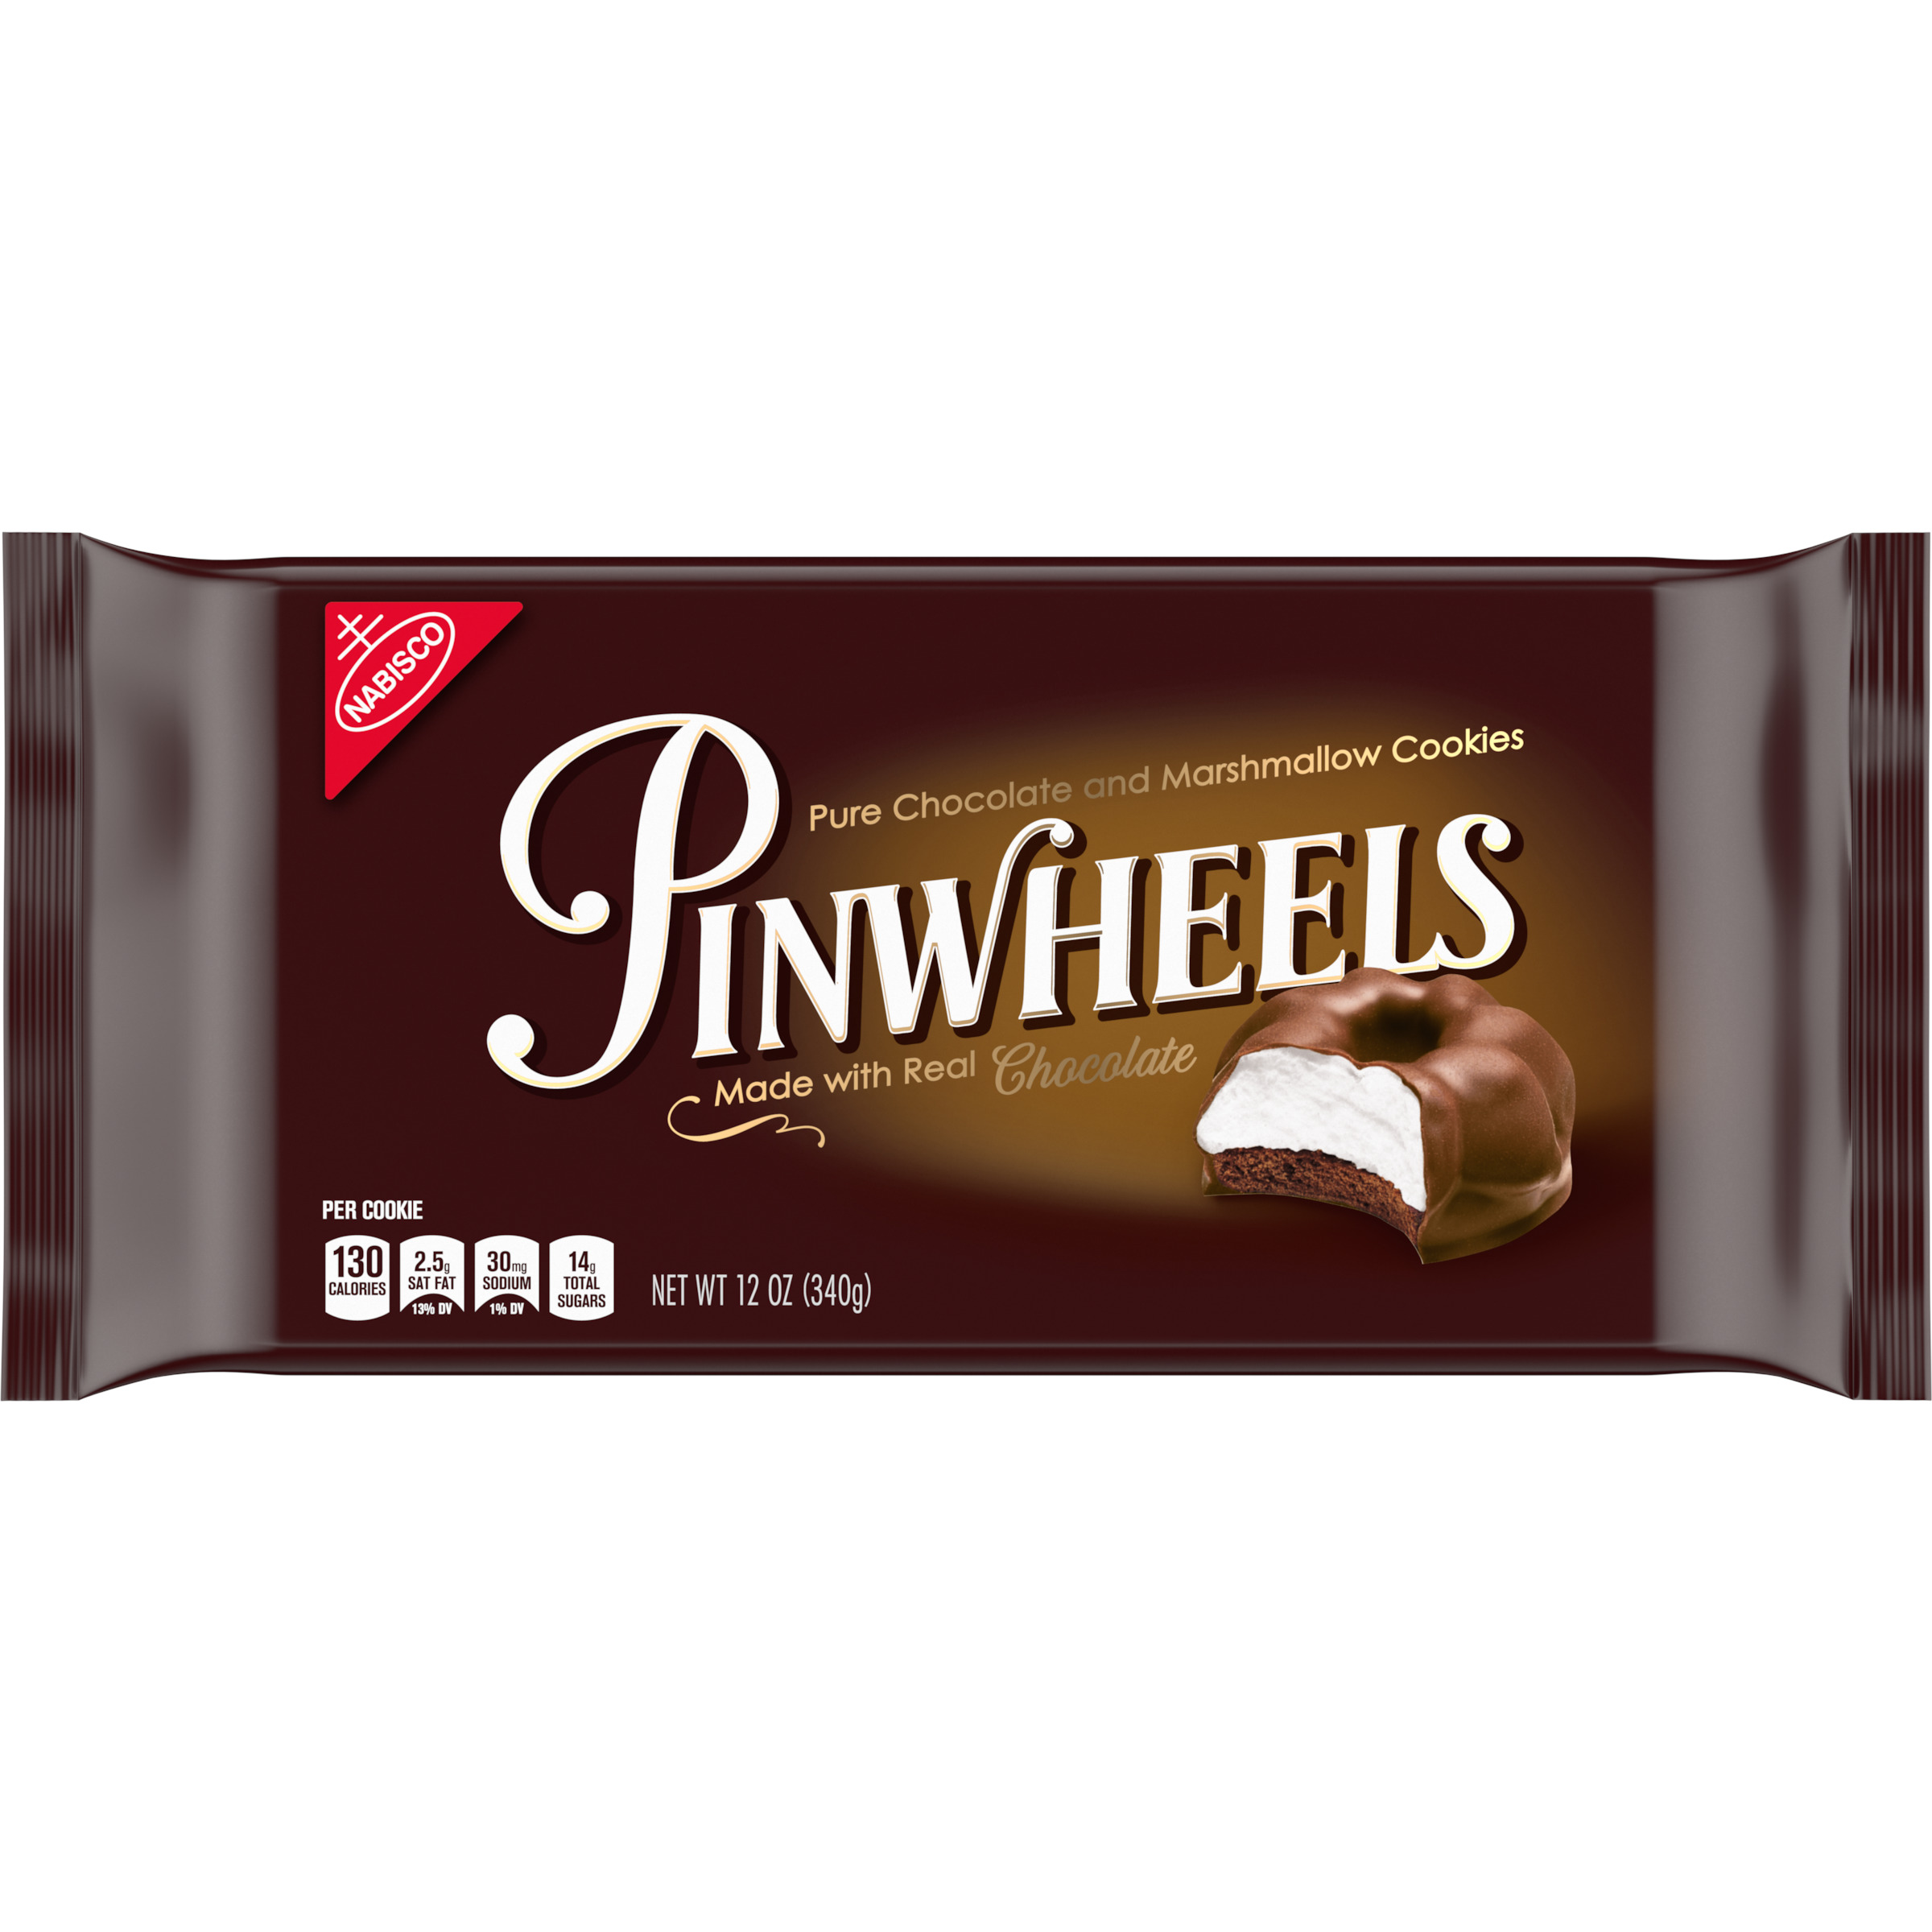 Pinwheels Pure Chocolate & Marshmallow Cookies, 12 oz-1